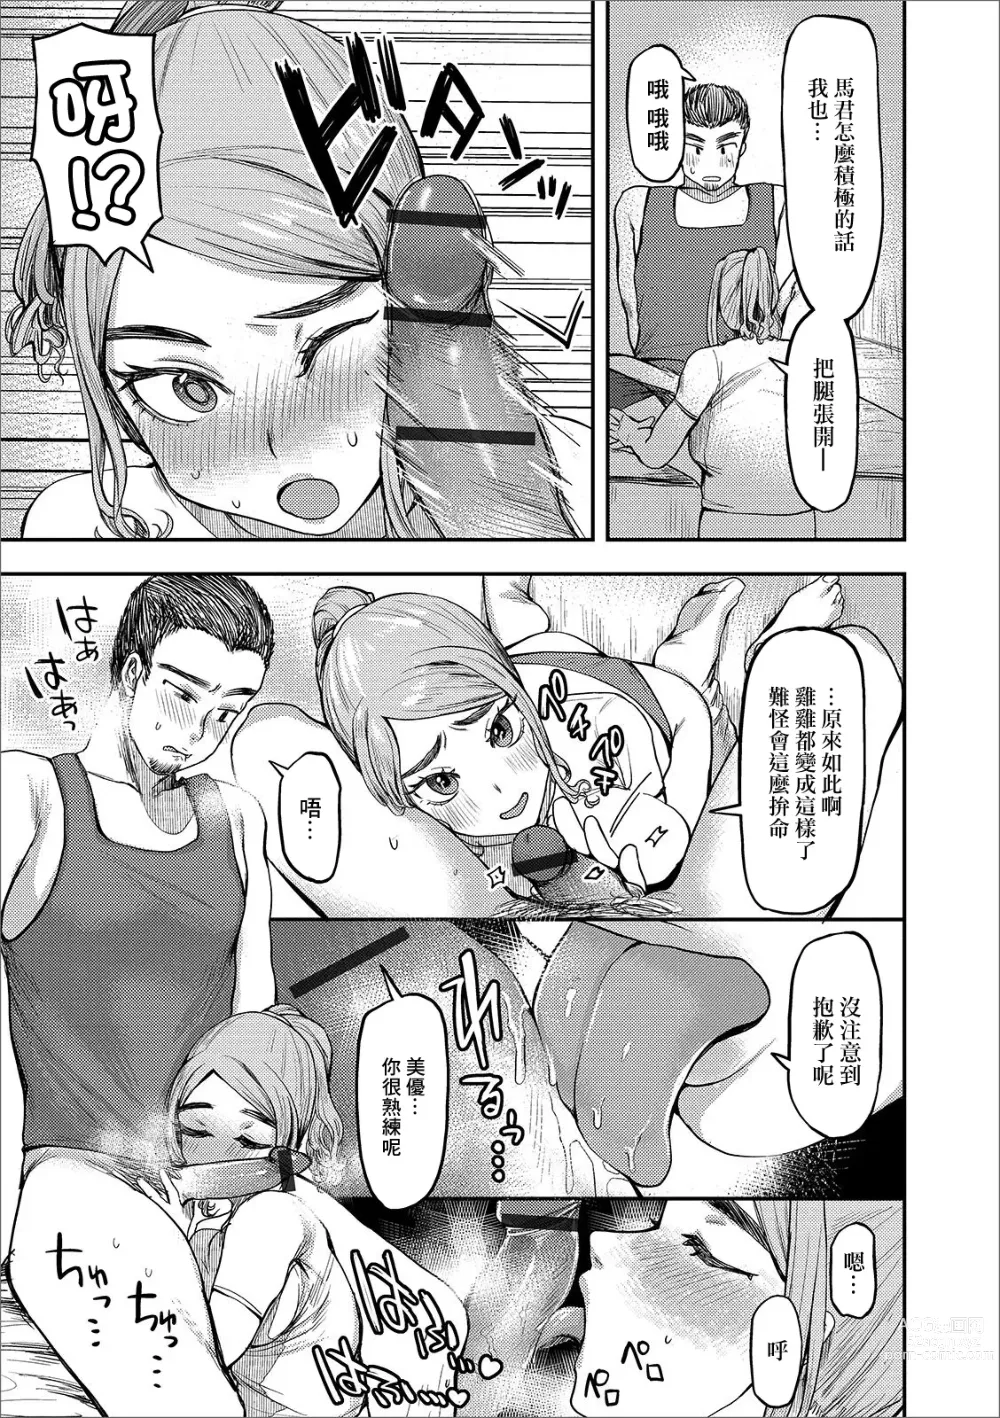 Page 7 of manga Dousoukai de Omochikaeri!